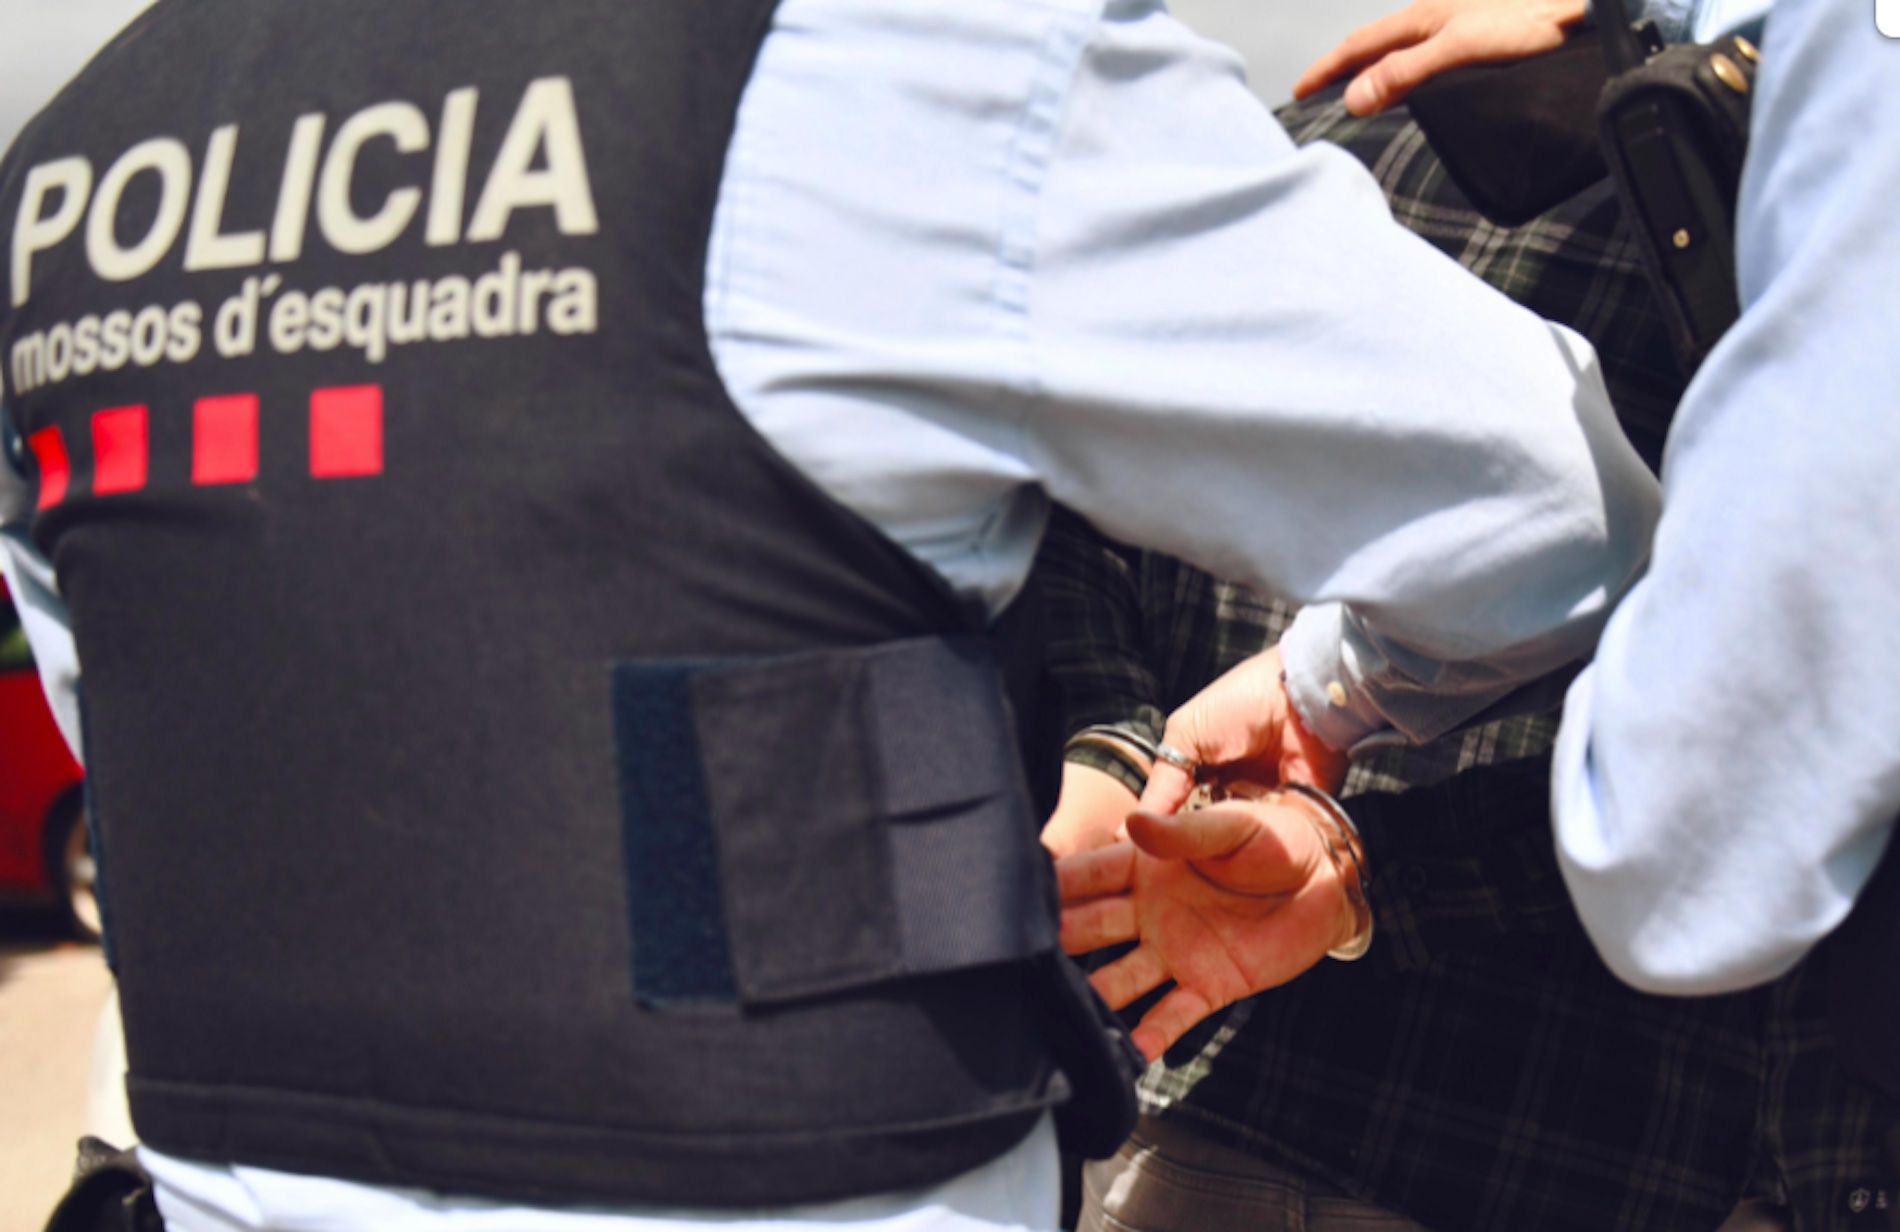 Detención mossos / Mossos d'Esquadra